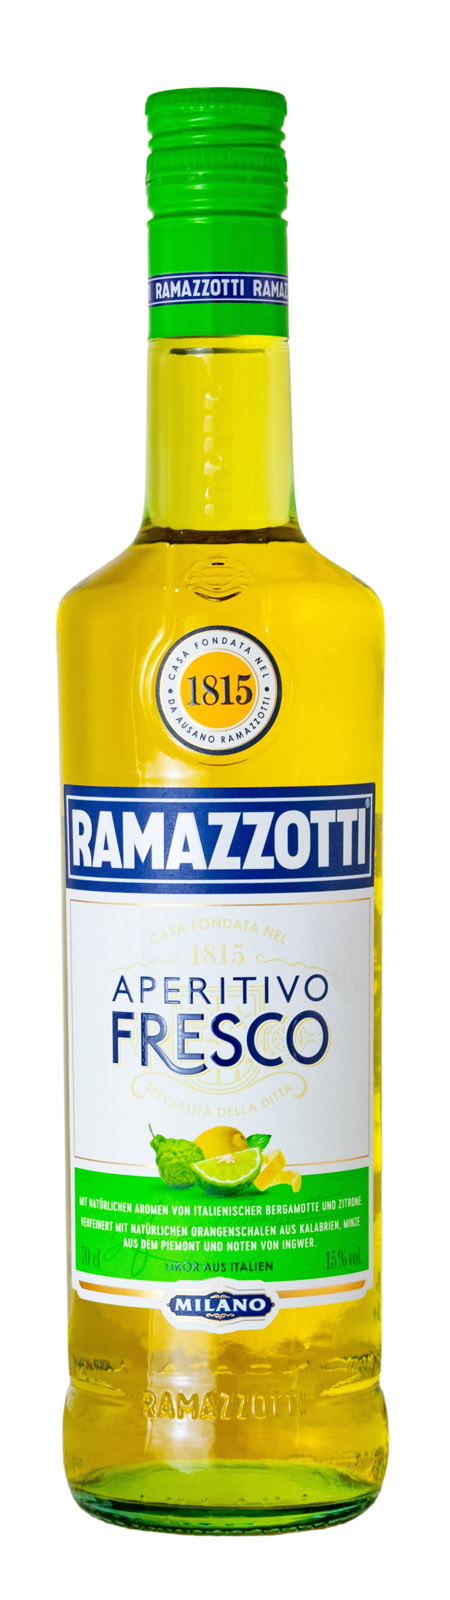 Fresco Aperitivo günstig kaufen Ramazzotti